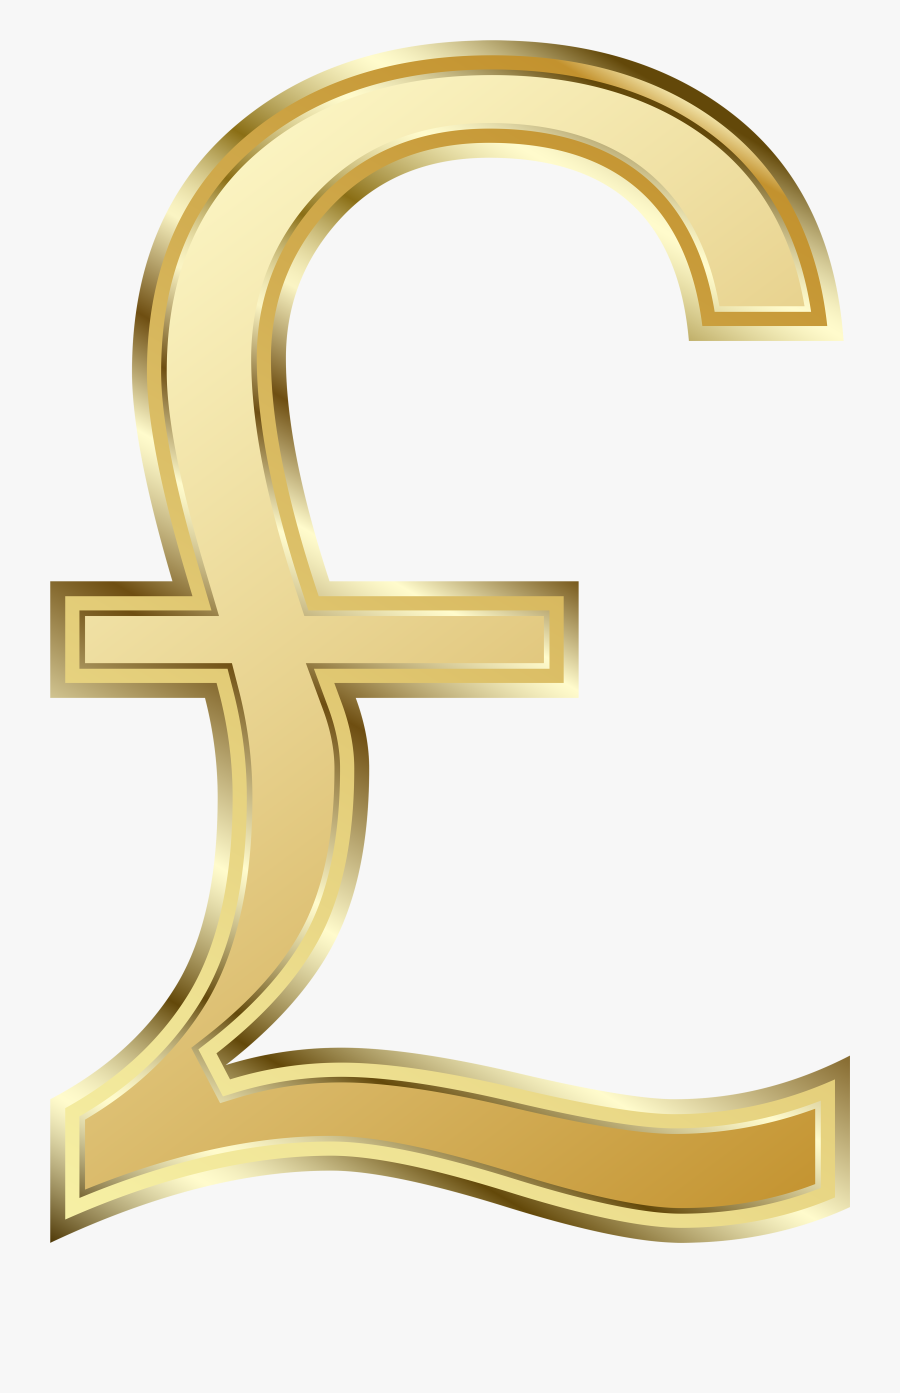 british pound symbol png clip art image gold british pound sign png free transparent clipart clipartkey british pound symbol png clip art image